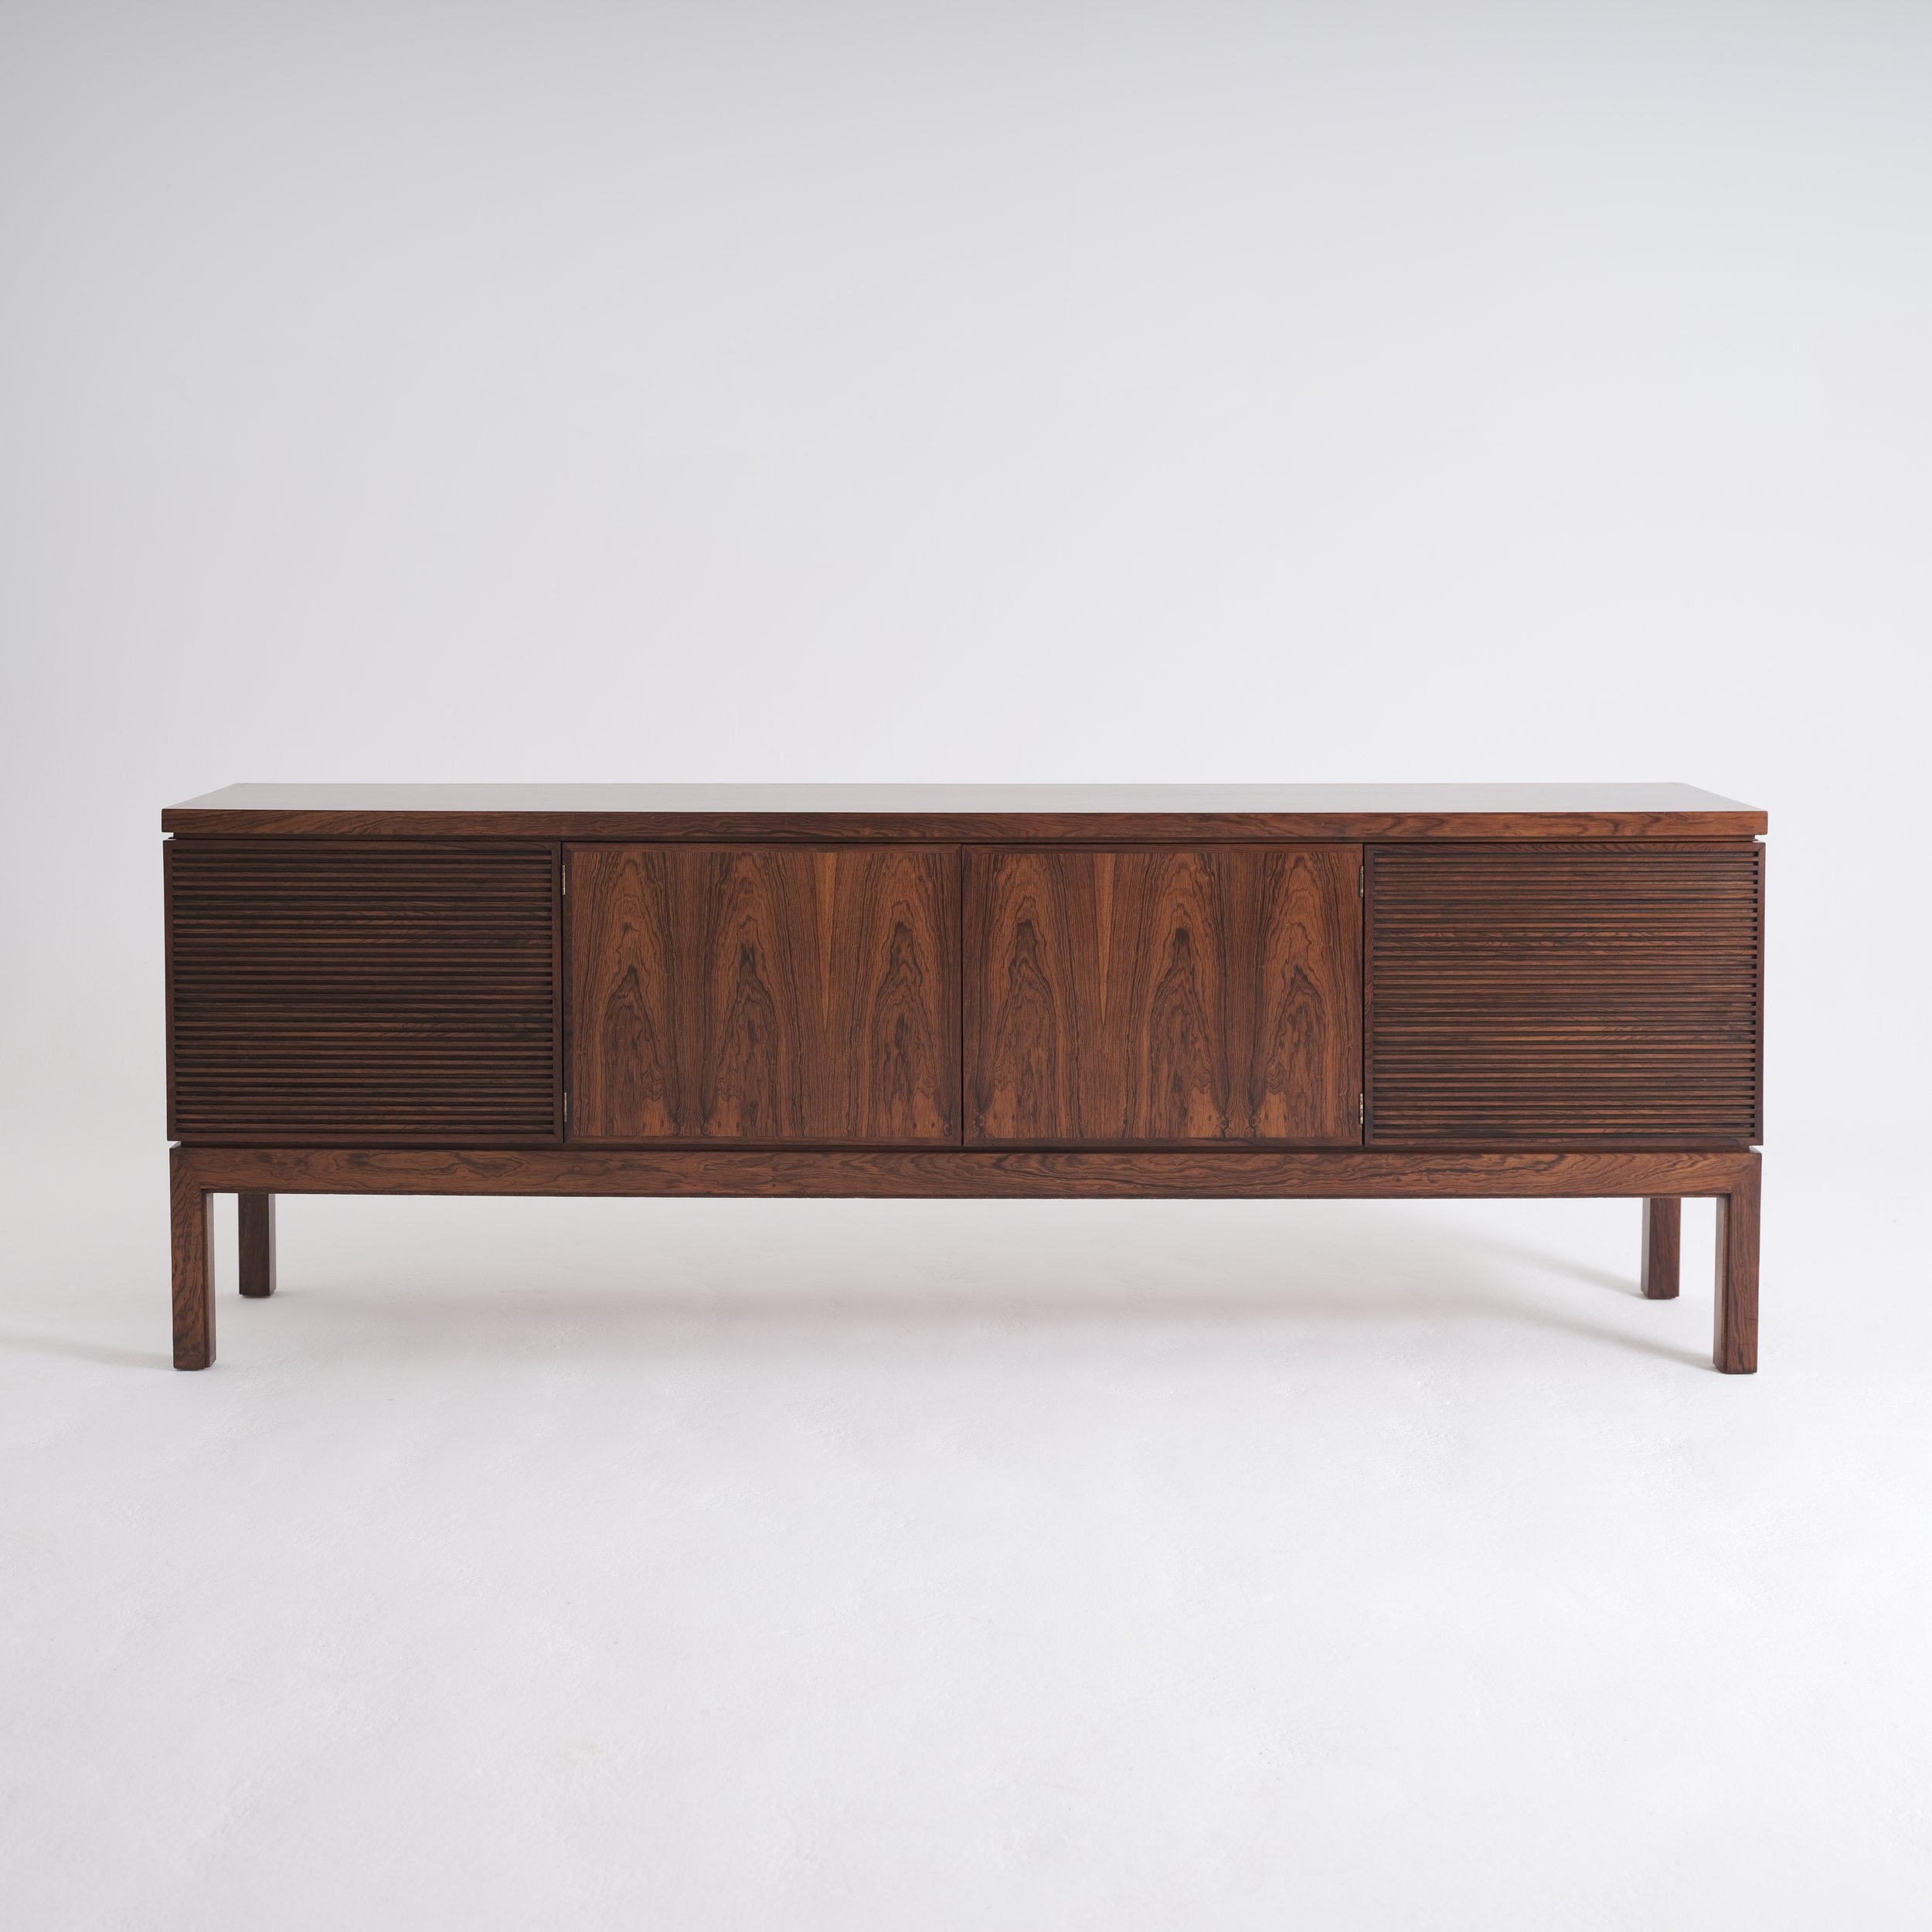 Furniture — Collection — Fiona McDonald